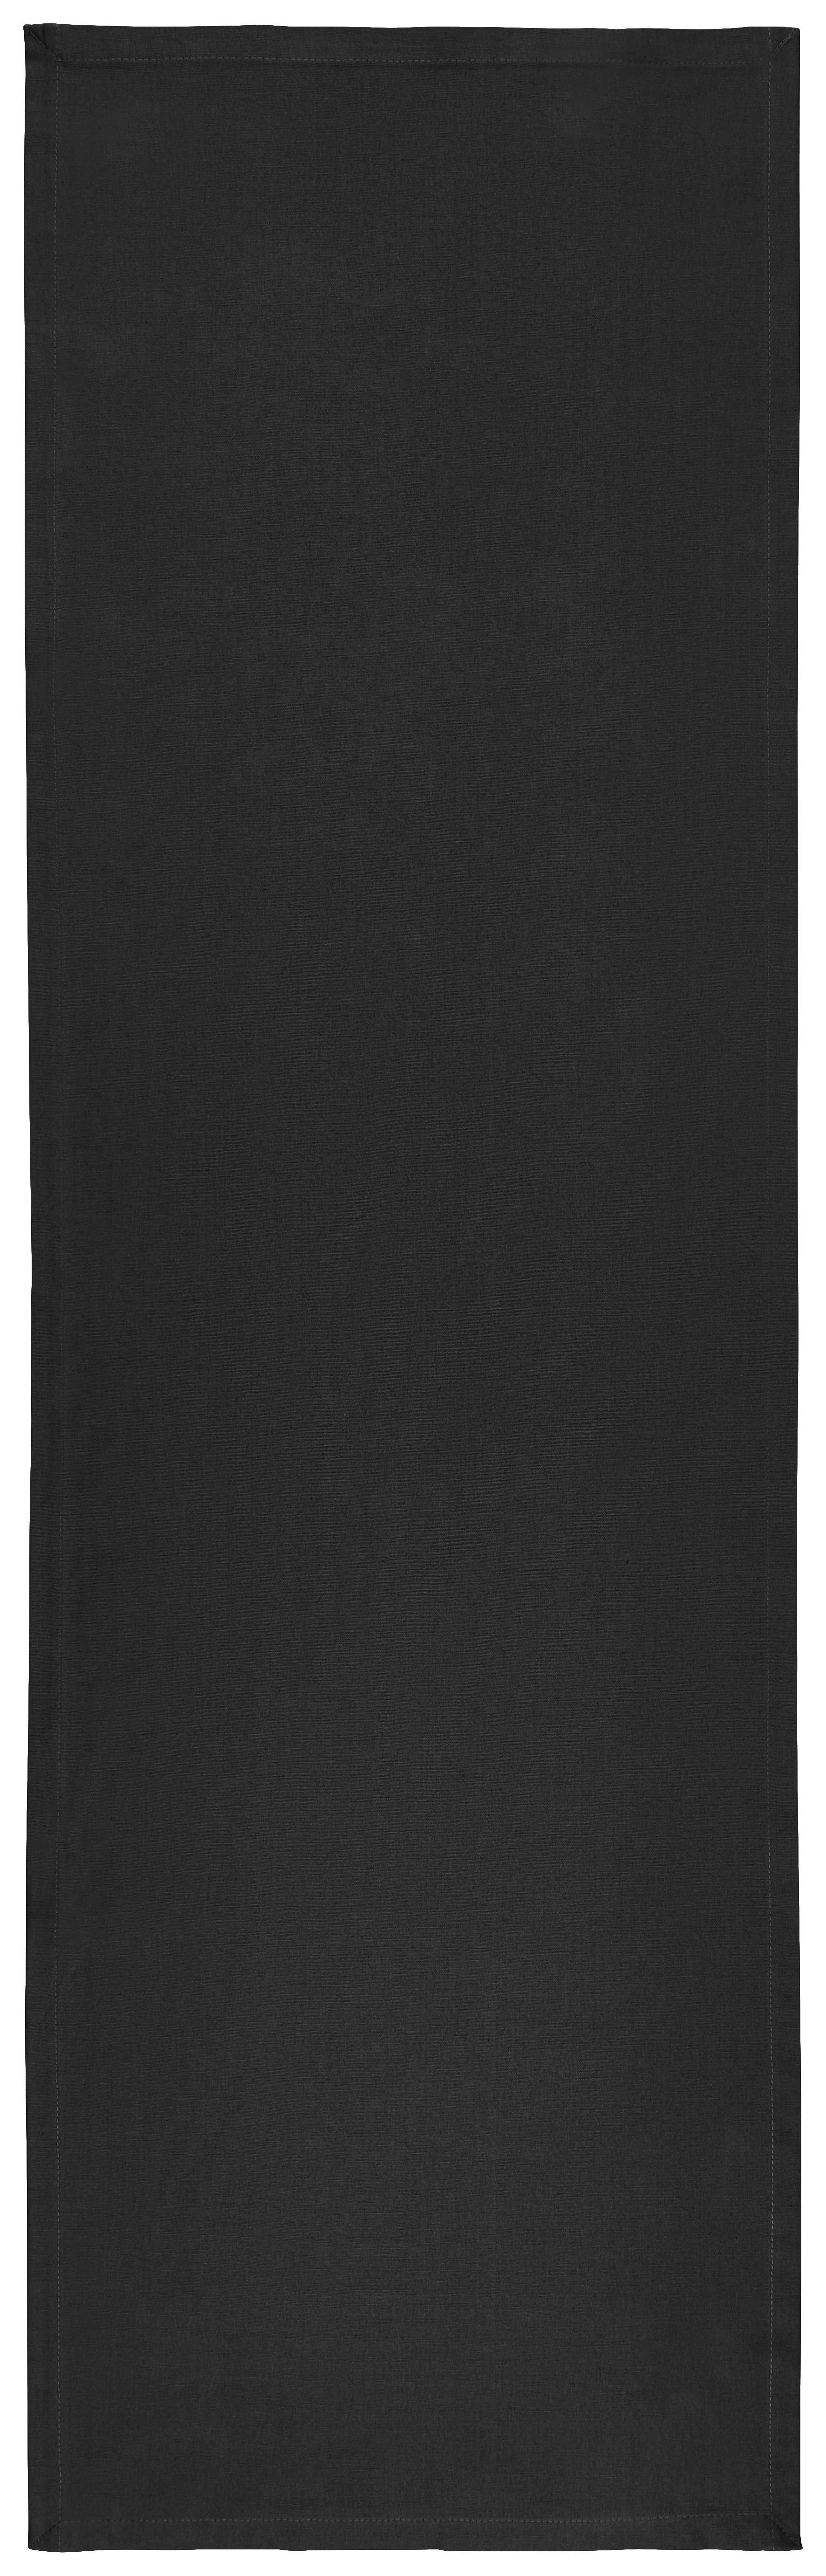 TISCHLÄUFER 45/150 cm   - Schwarz, Basics, Textil (45/150cm) - Novel